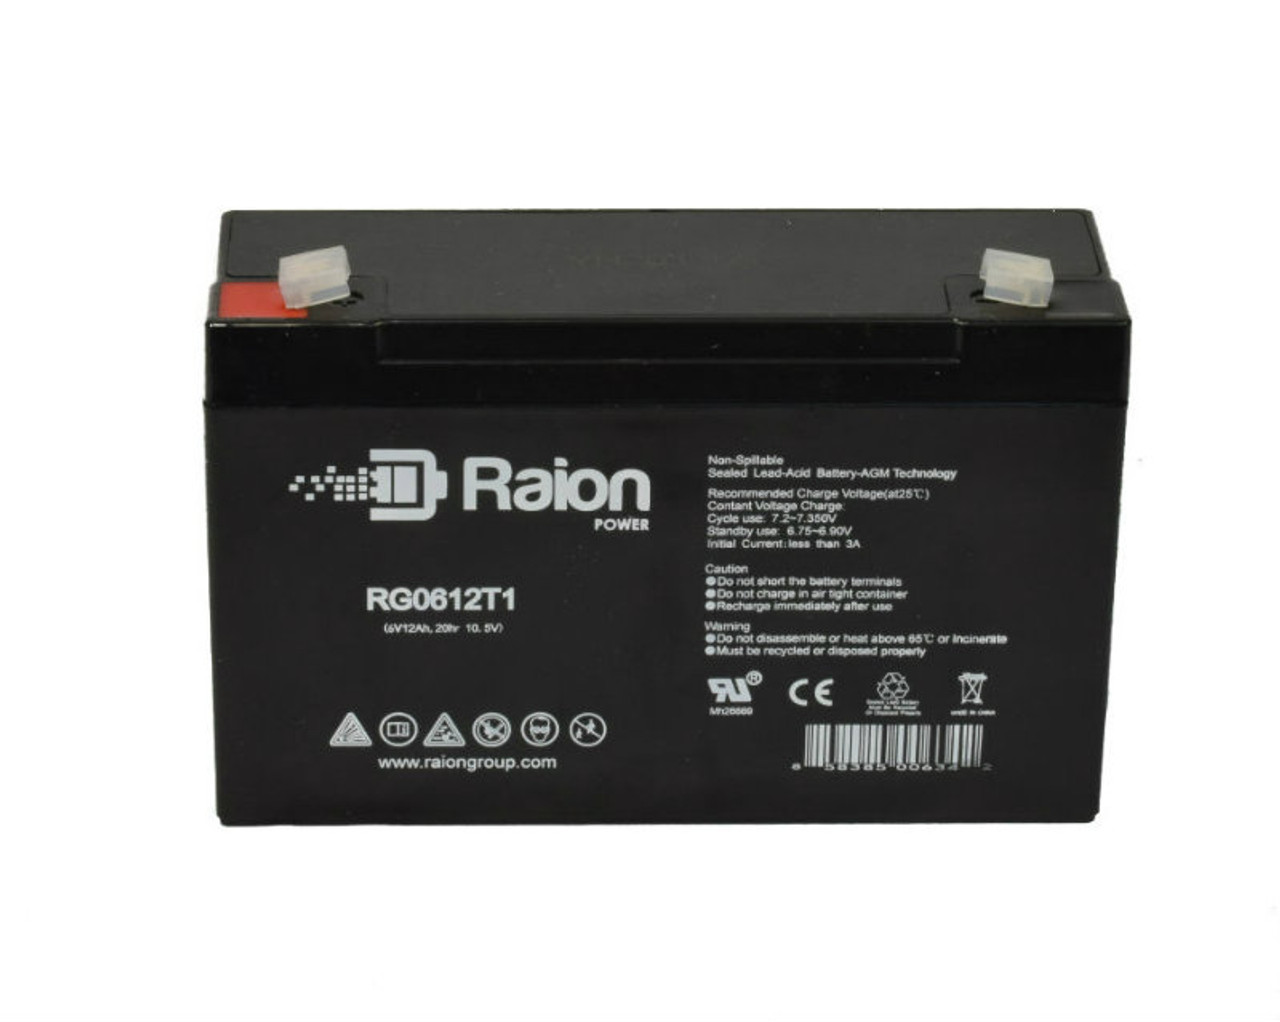 Raion Power RG06120T1 SLA Battery for Technacell TC6100